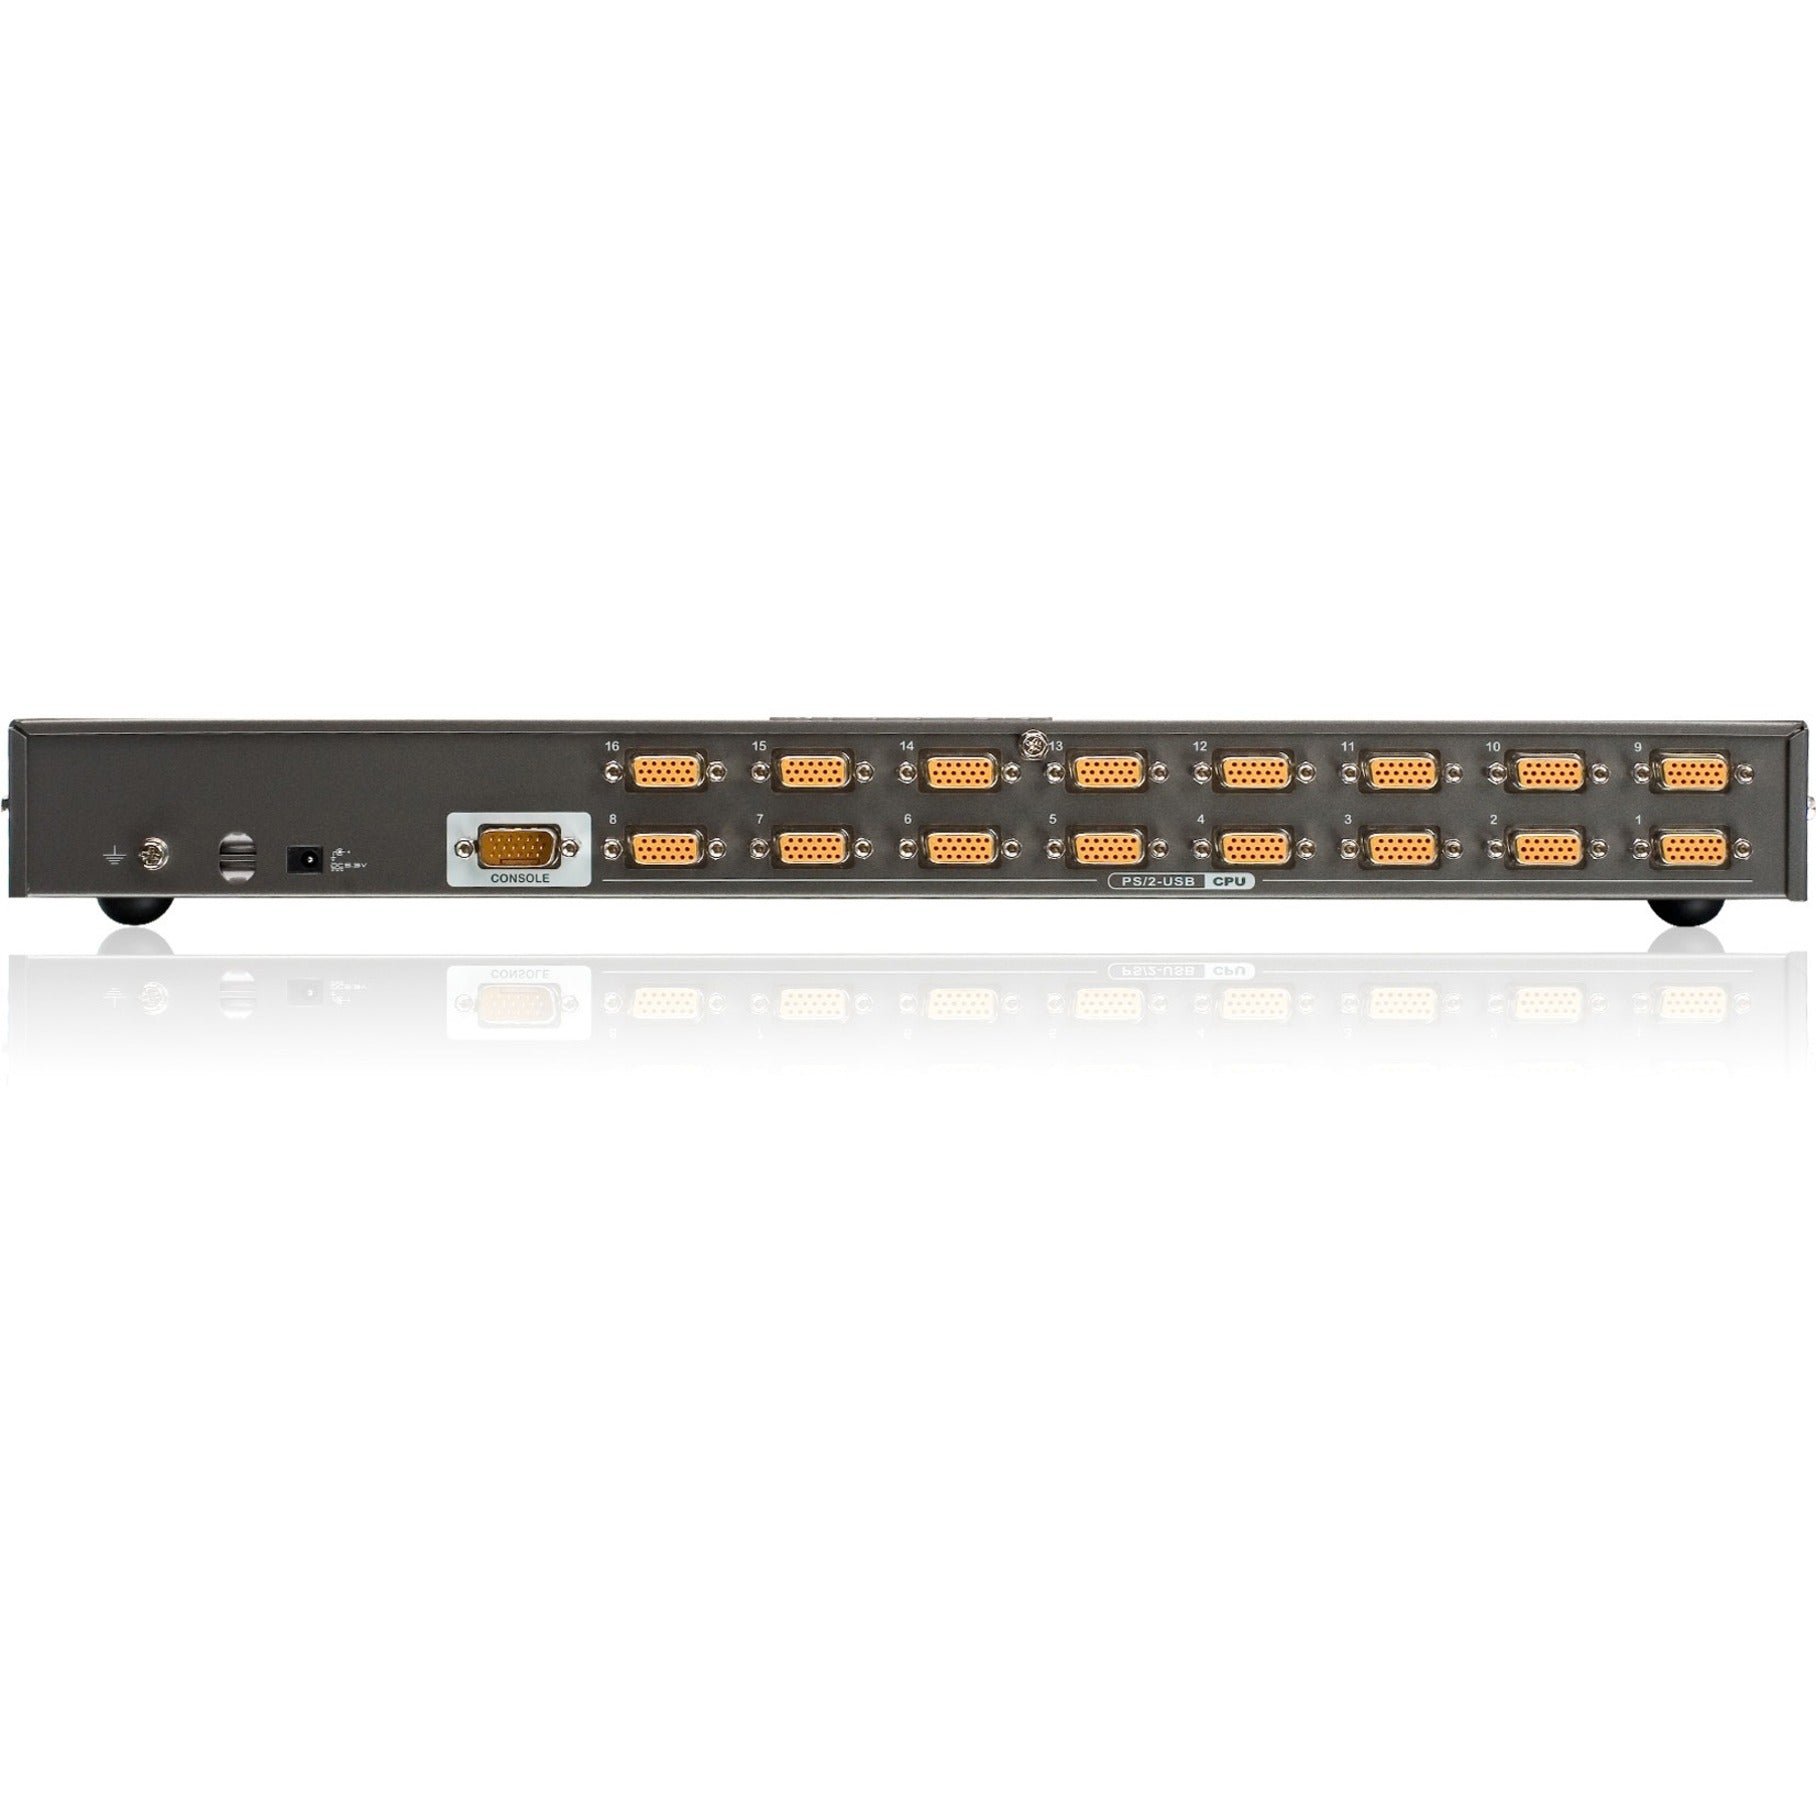 IOGEAR GCS1716KITU KVM Switch, 16-Port Rack-Mountable USB KVM Switchbox